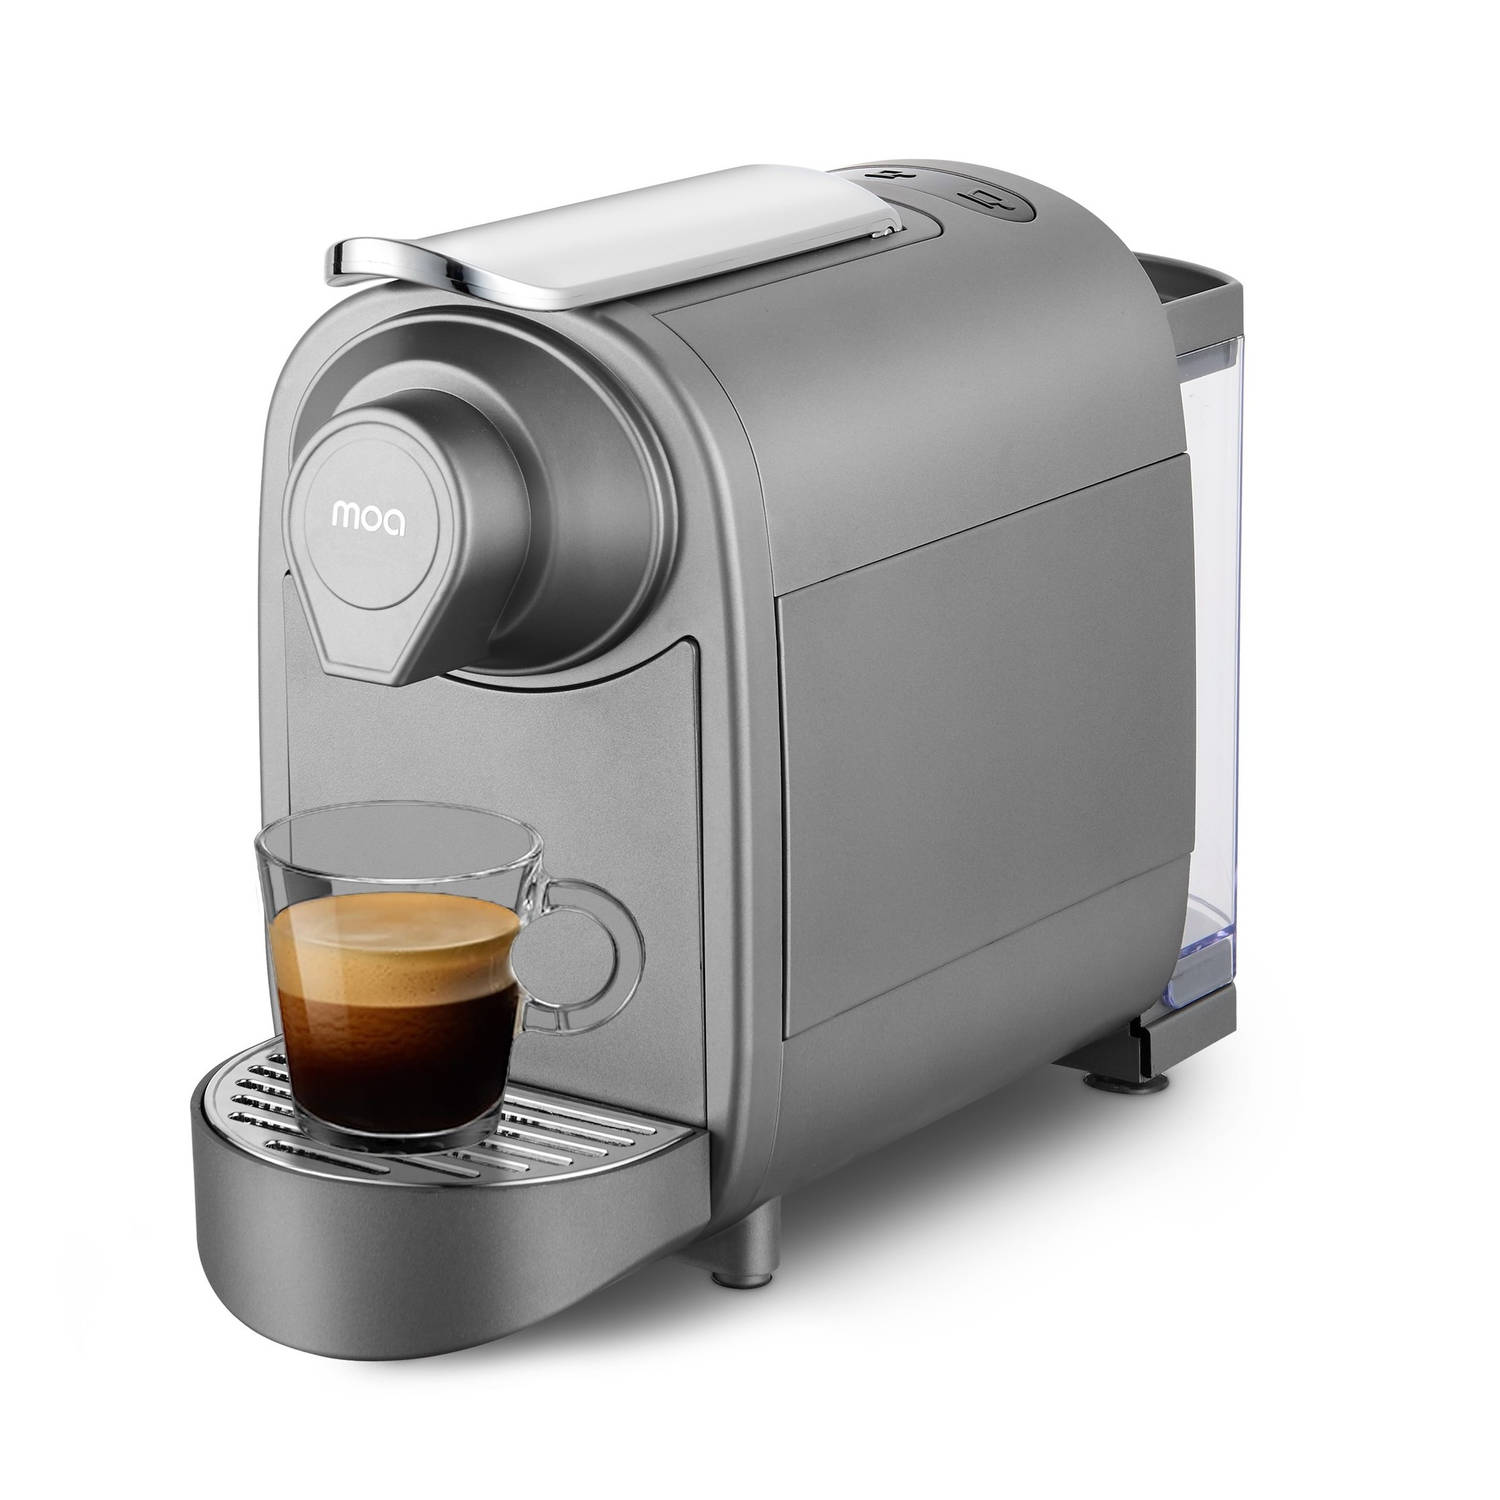 Moa Cm01t - Koffiecupmachine - Koffieapparaat Voor Cups - Ristretto, Espresso & Lungo - Grijs